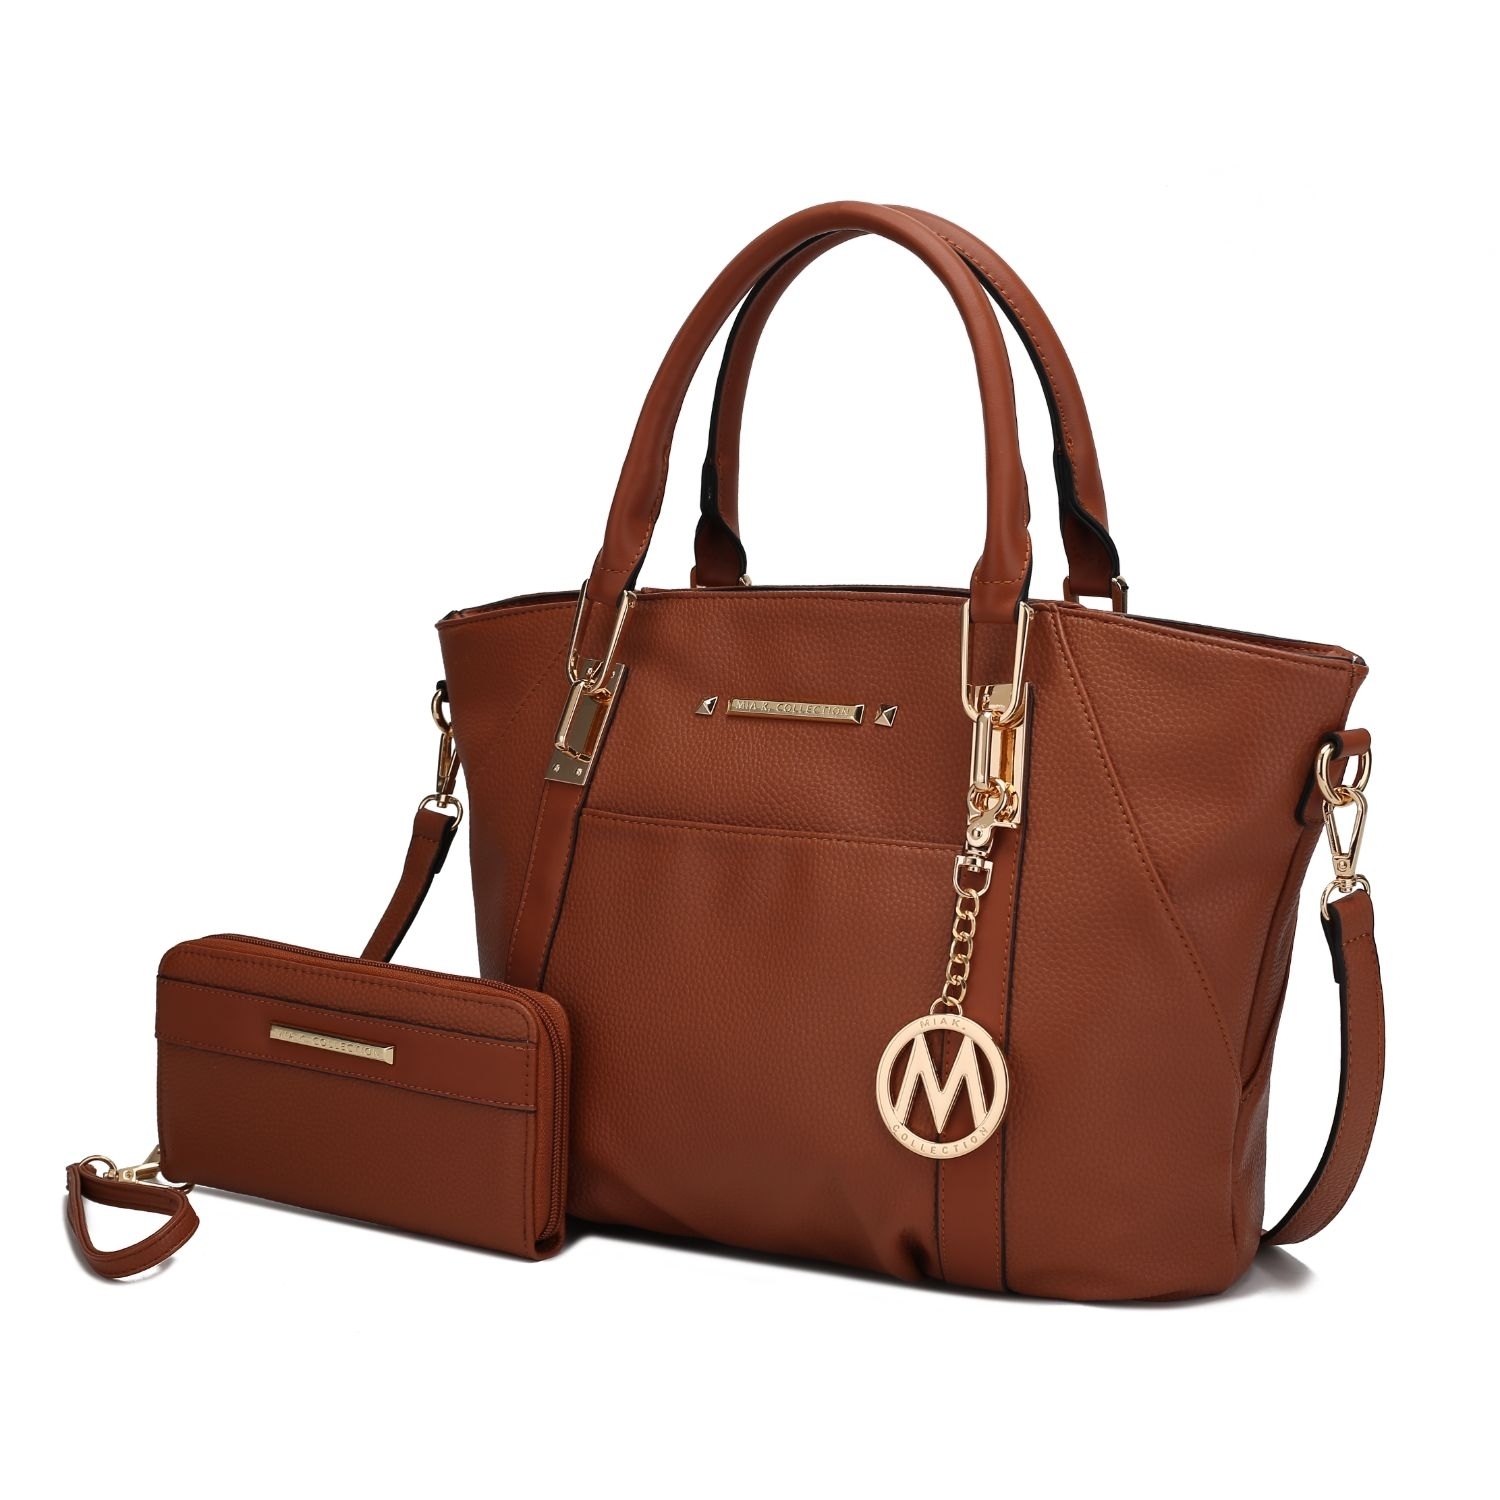 MKF Collection Darielle Satchel Handbag With Wallet By Mia K. - Pink